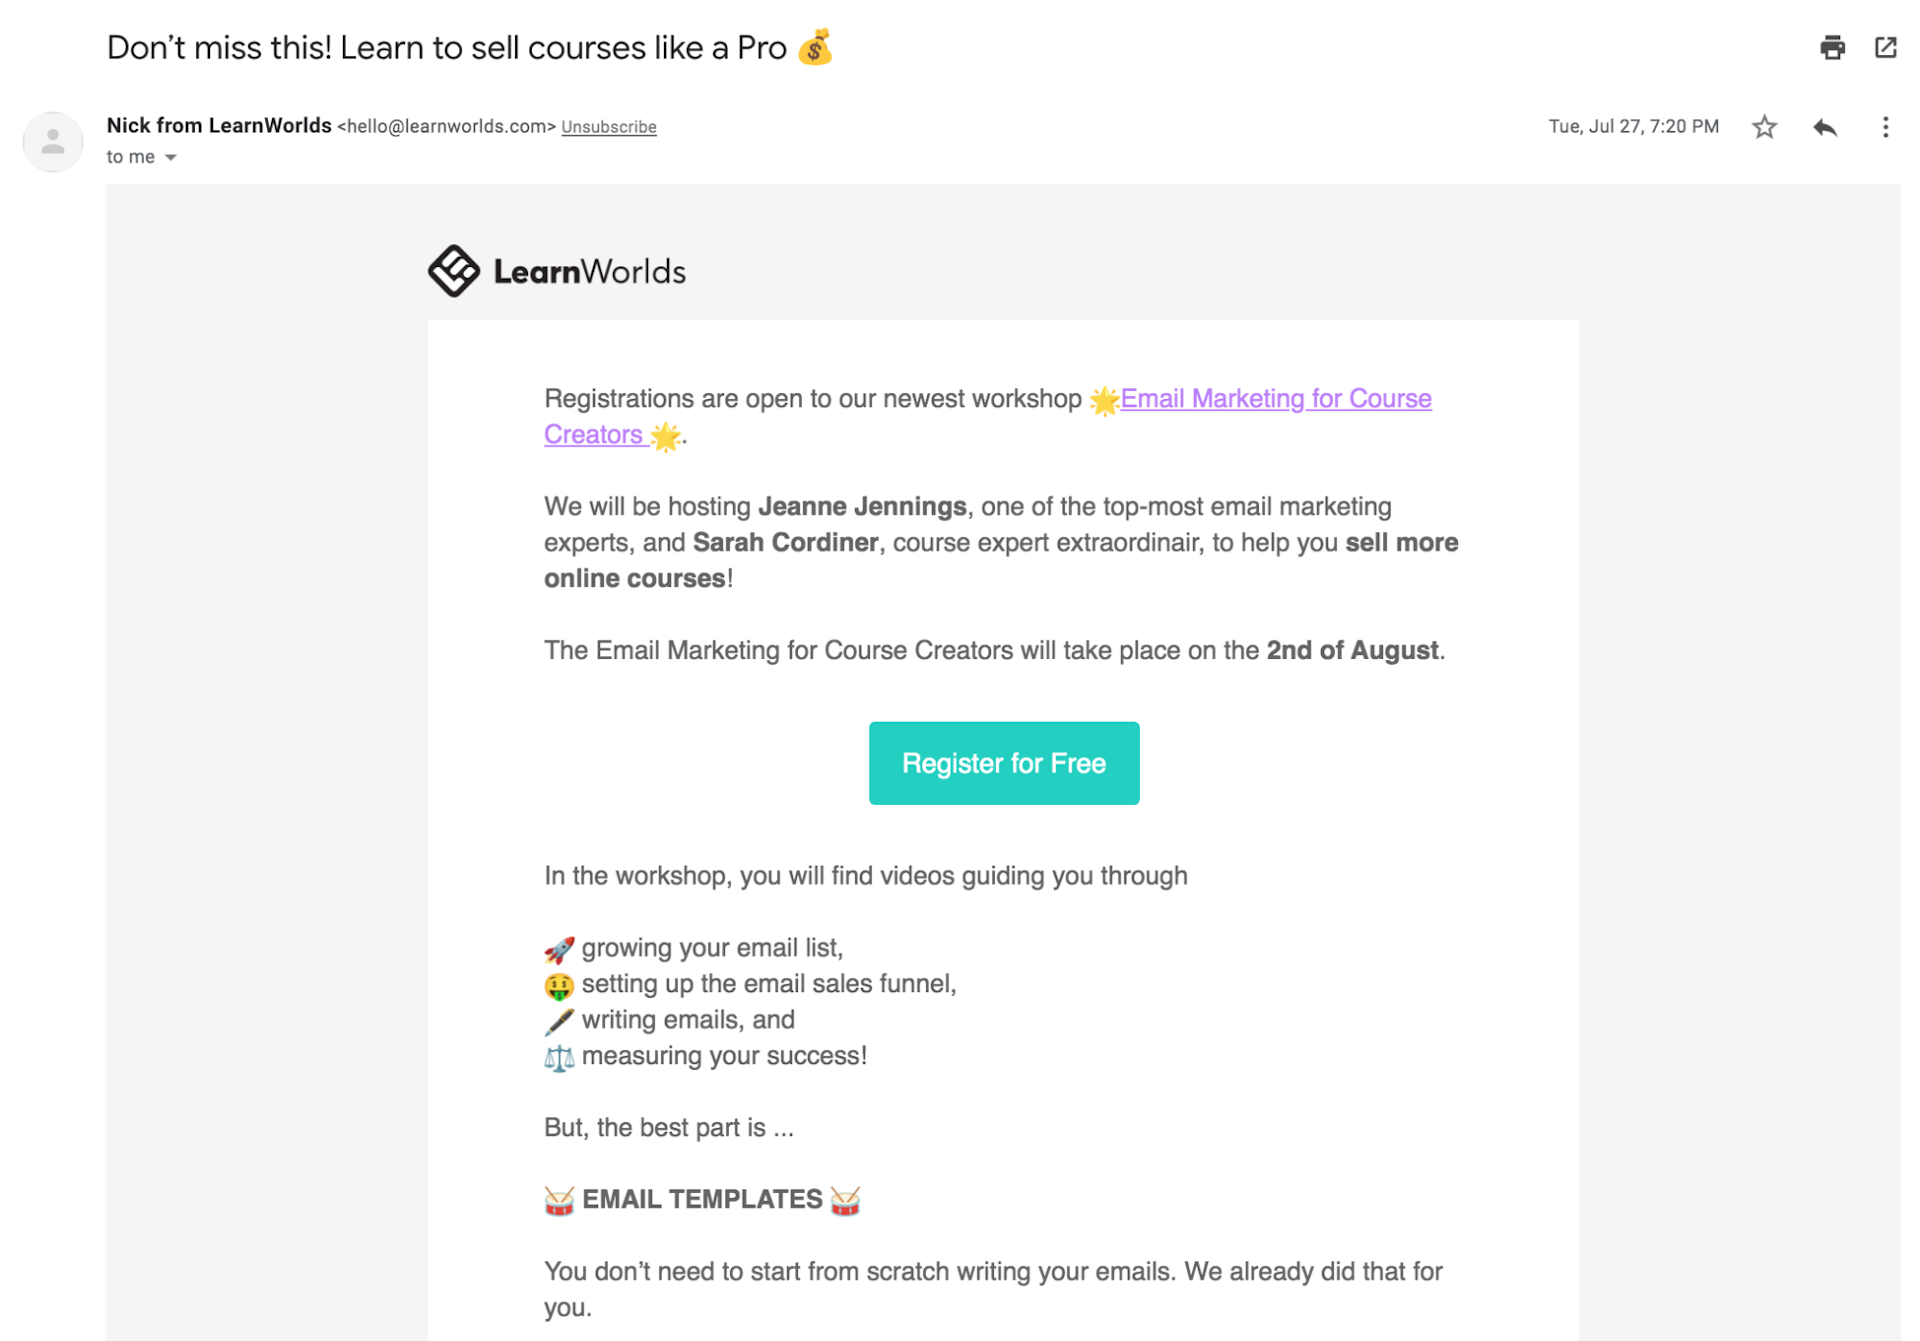 Webinar invitation example from LearnWorlds.